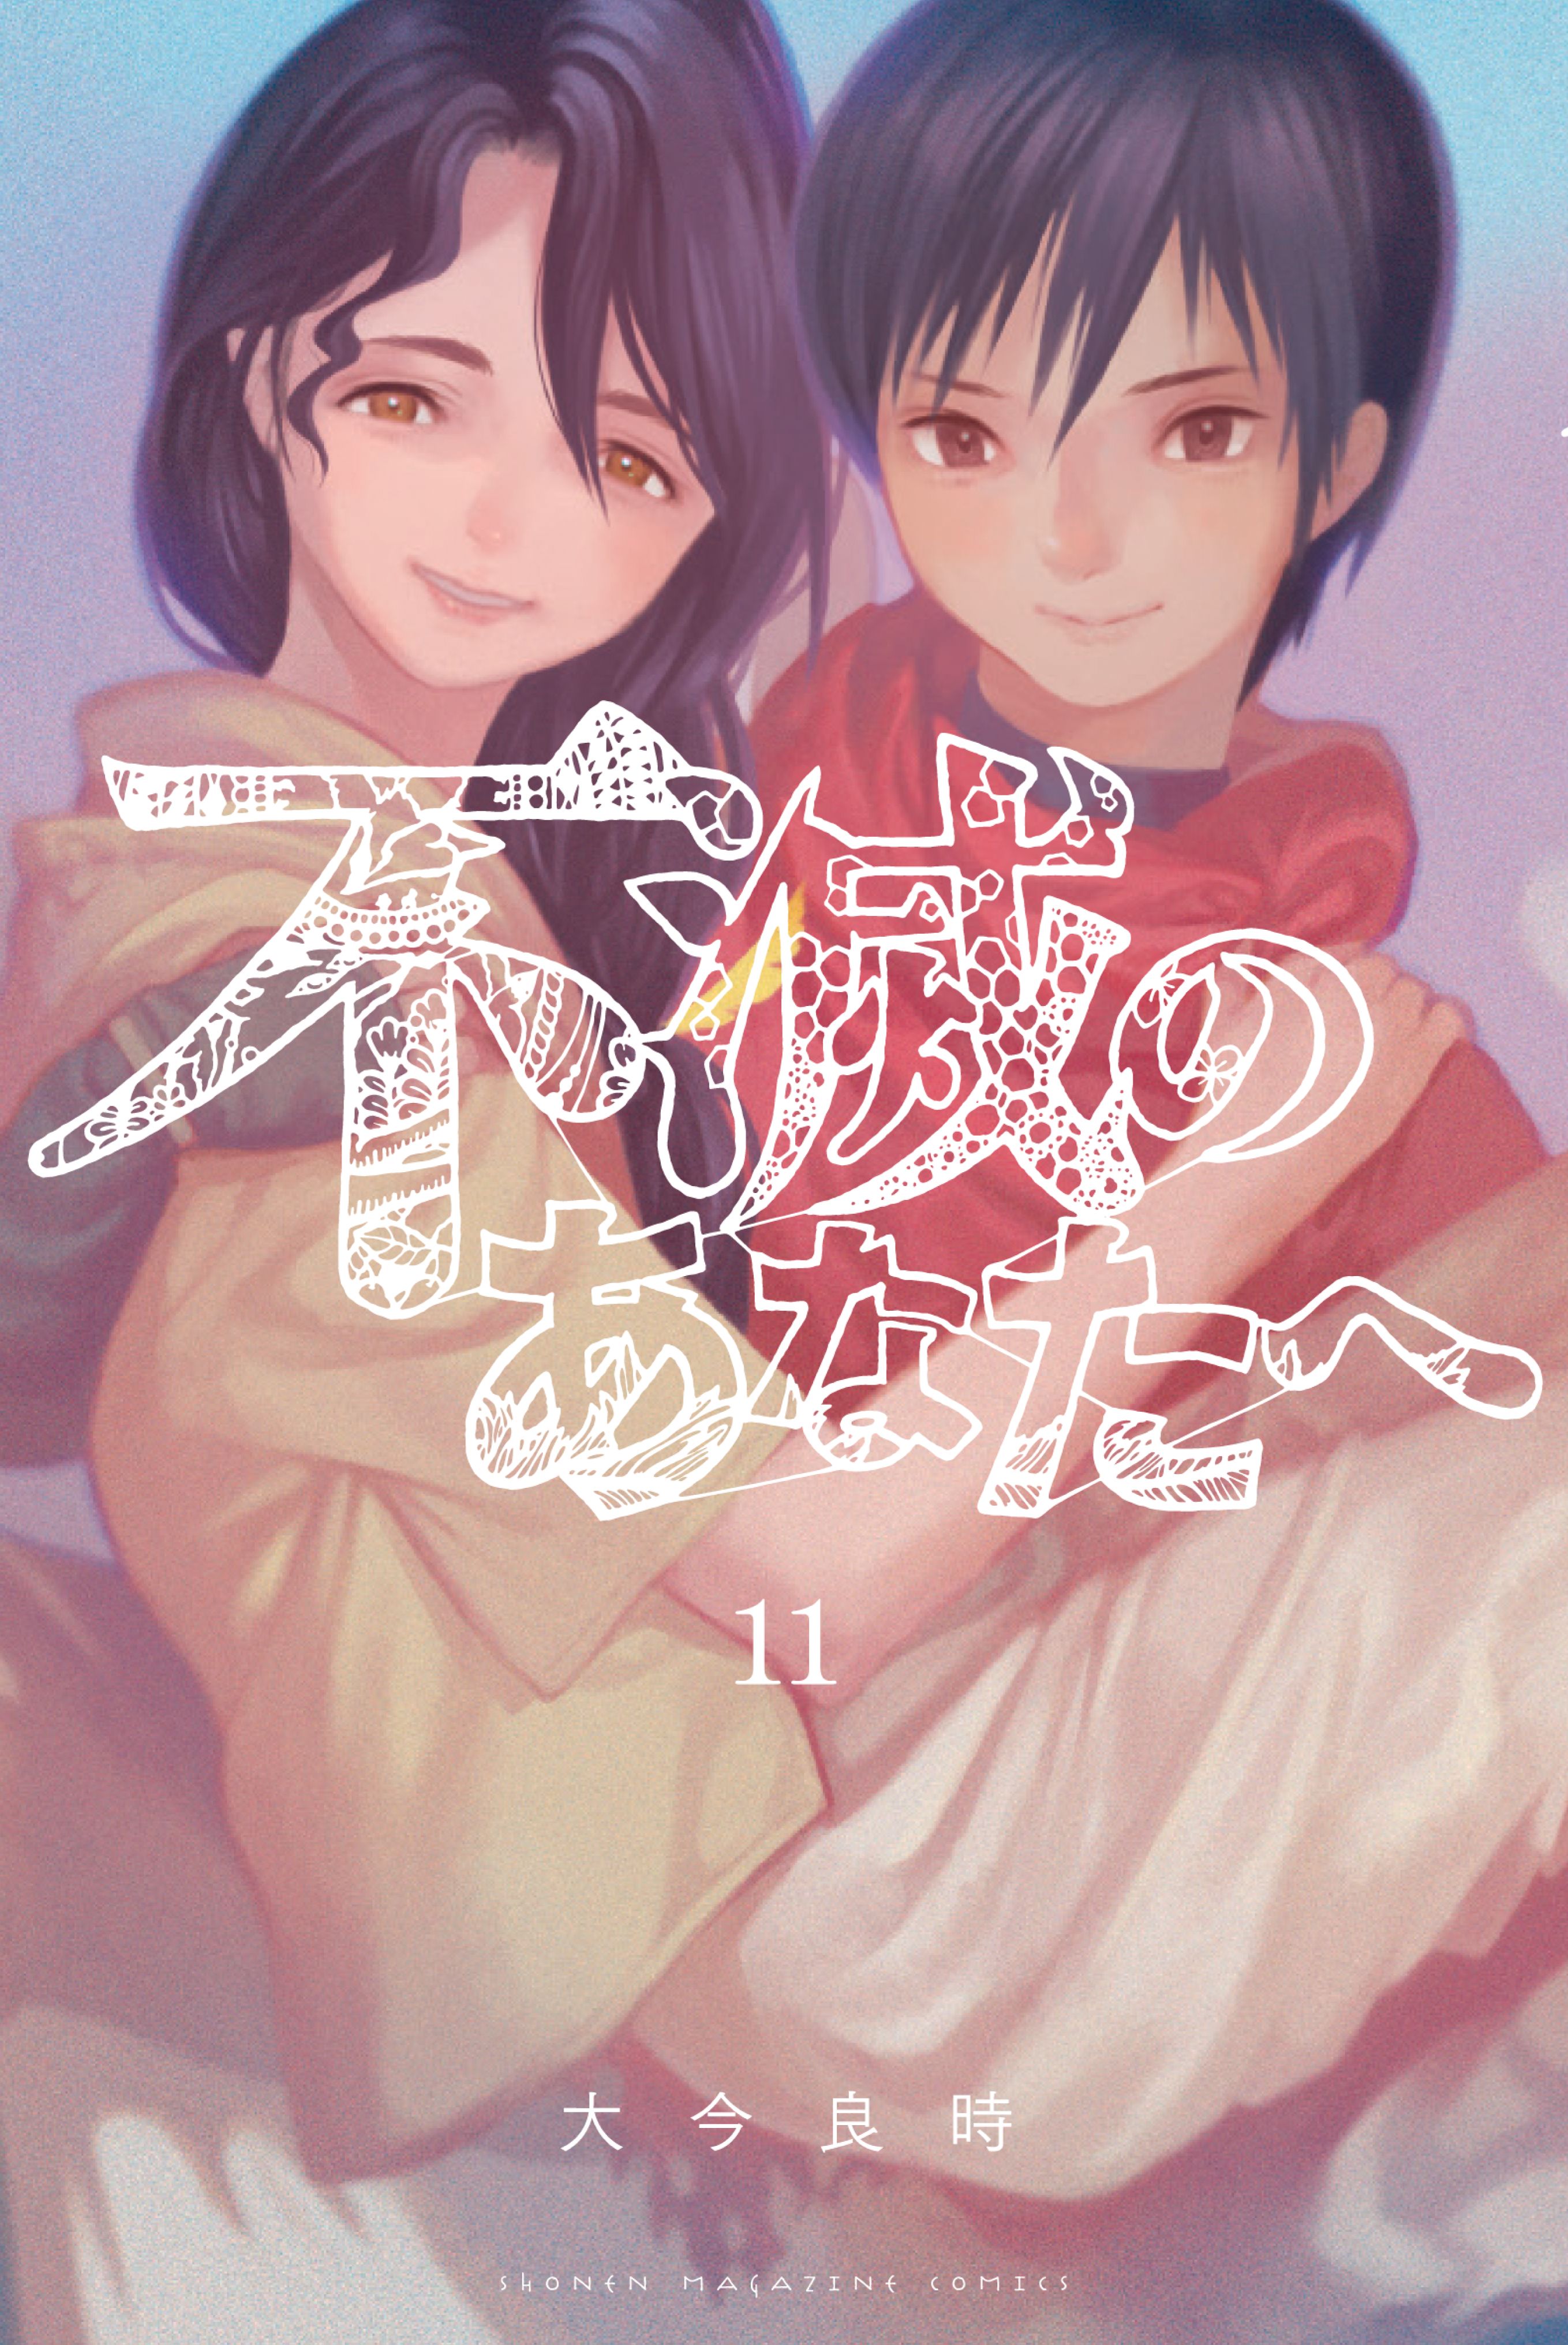 To Your Eternity Volume 3 (Fumetsu no Anata e) - Manga Store - MyAnimeList .net